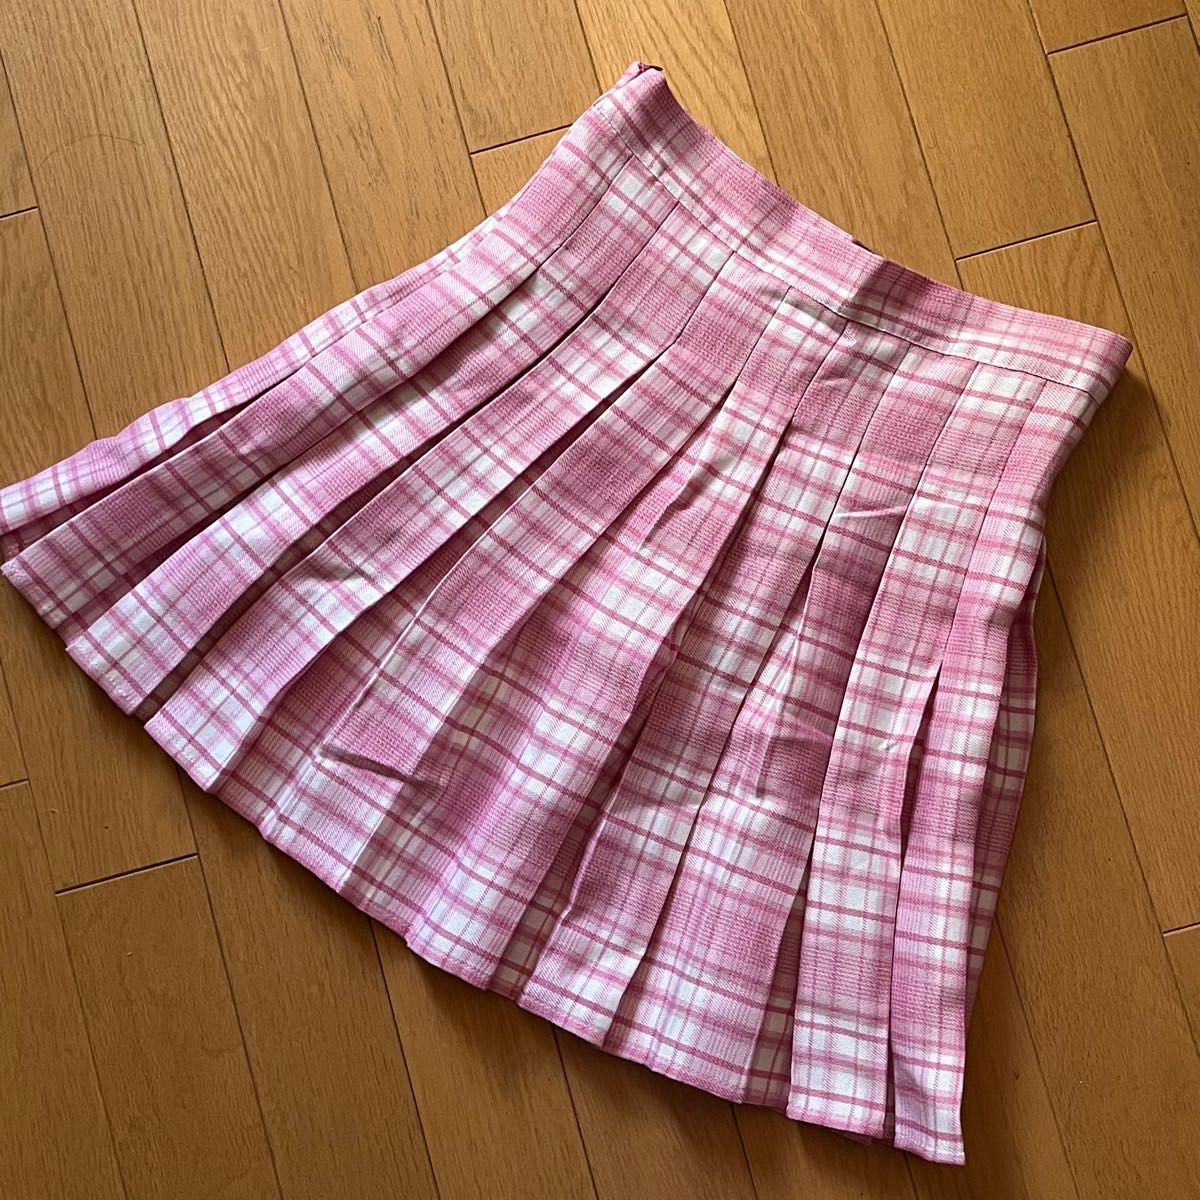 SHEIN ROMWE KAWAII ピンク チェック プリーツスカート 制服風 ミニスカート コスプレ など｜PayPayフリマ